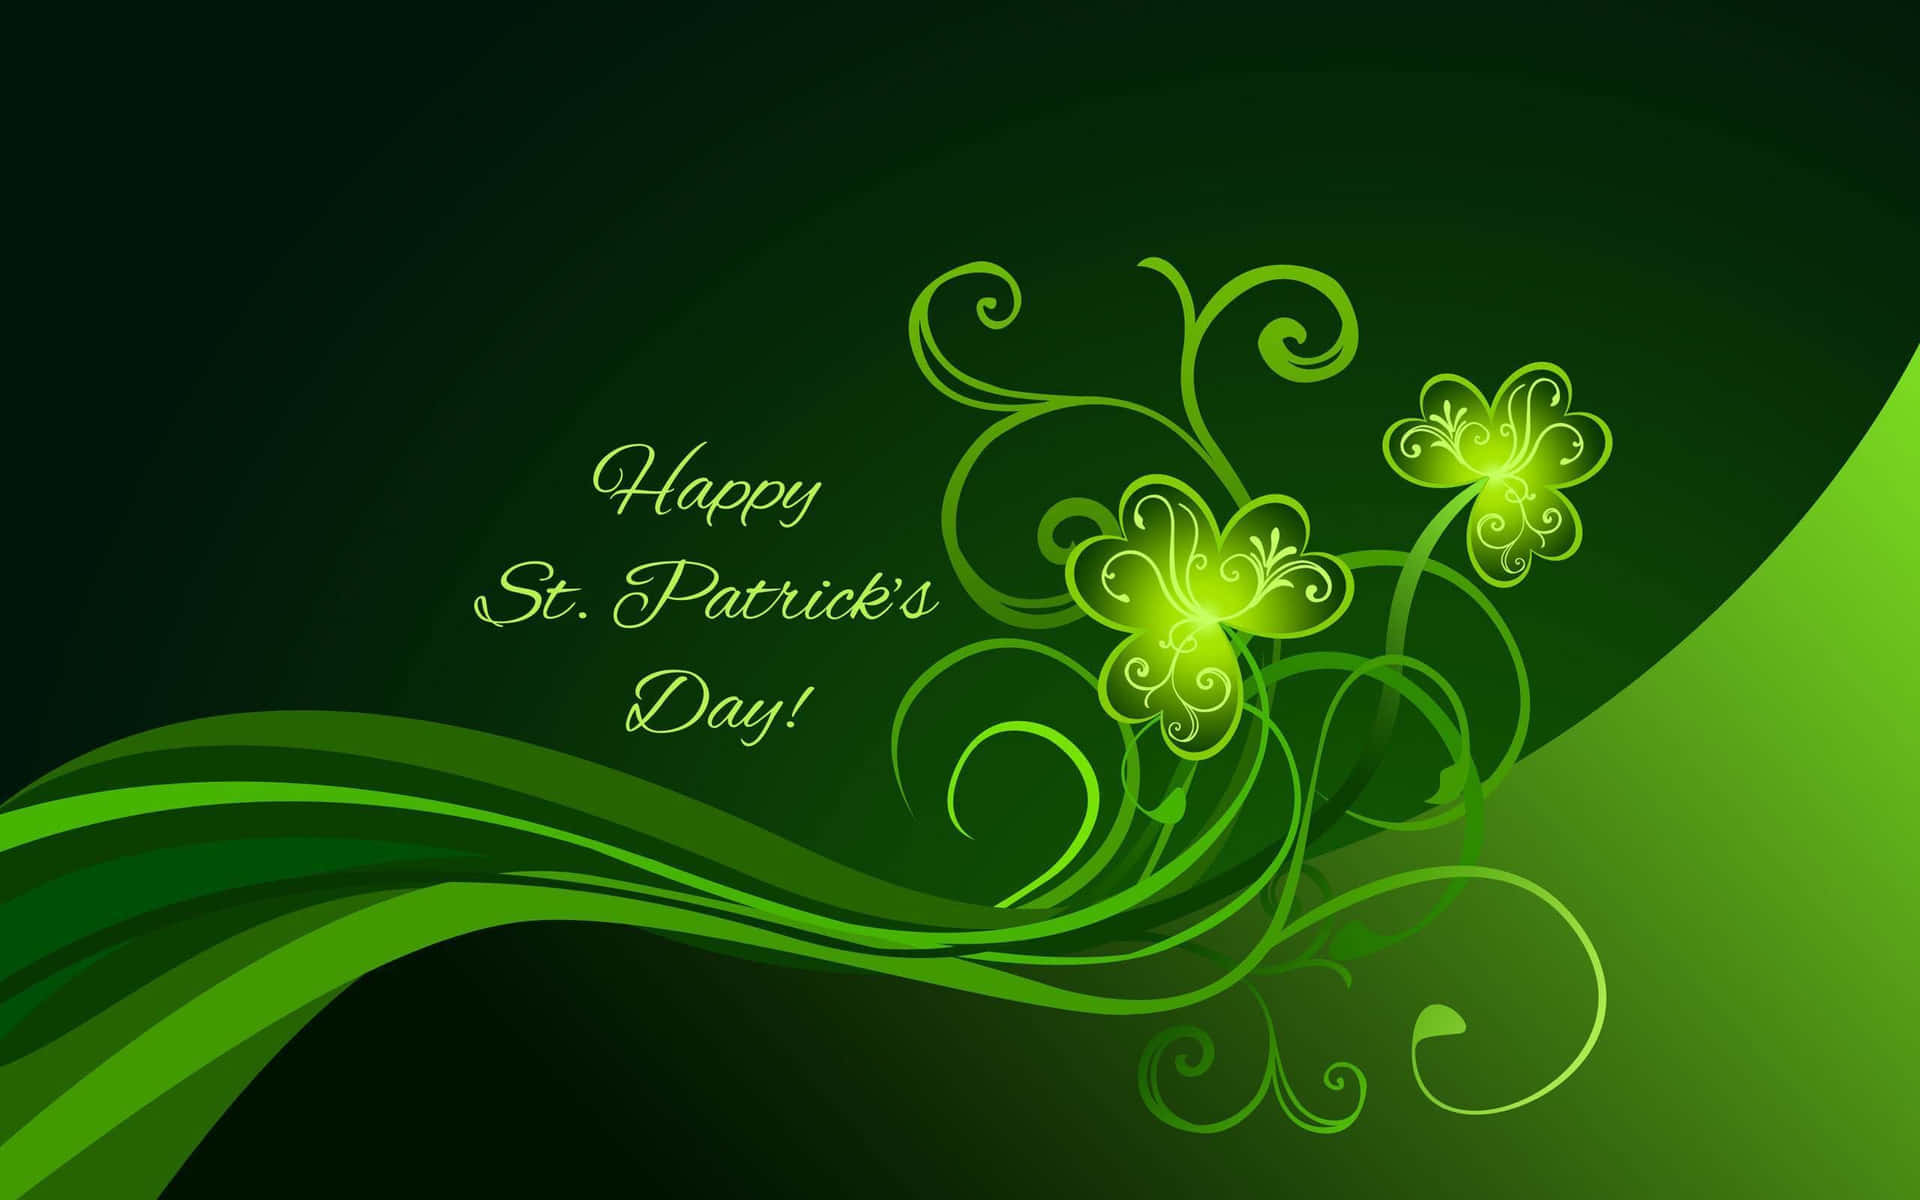 Swirly Clover St. Patrick's Day Background